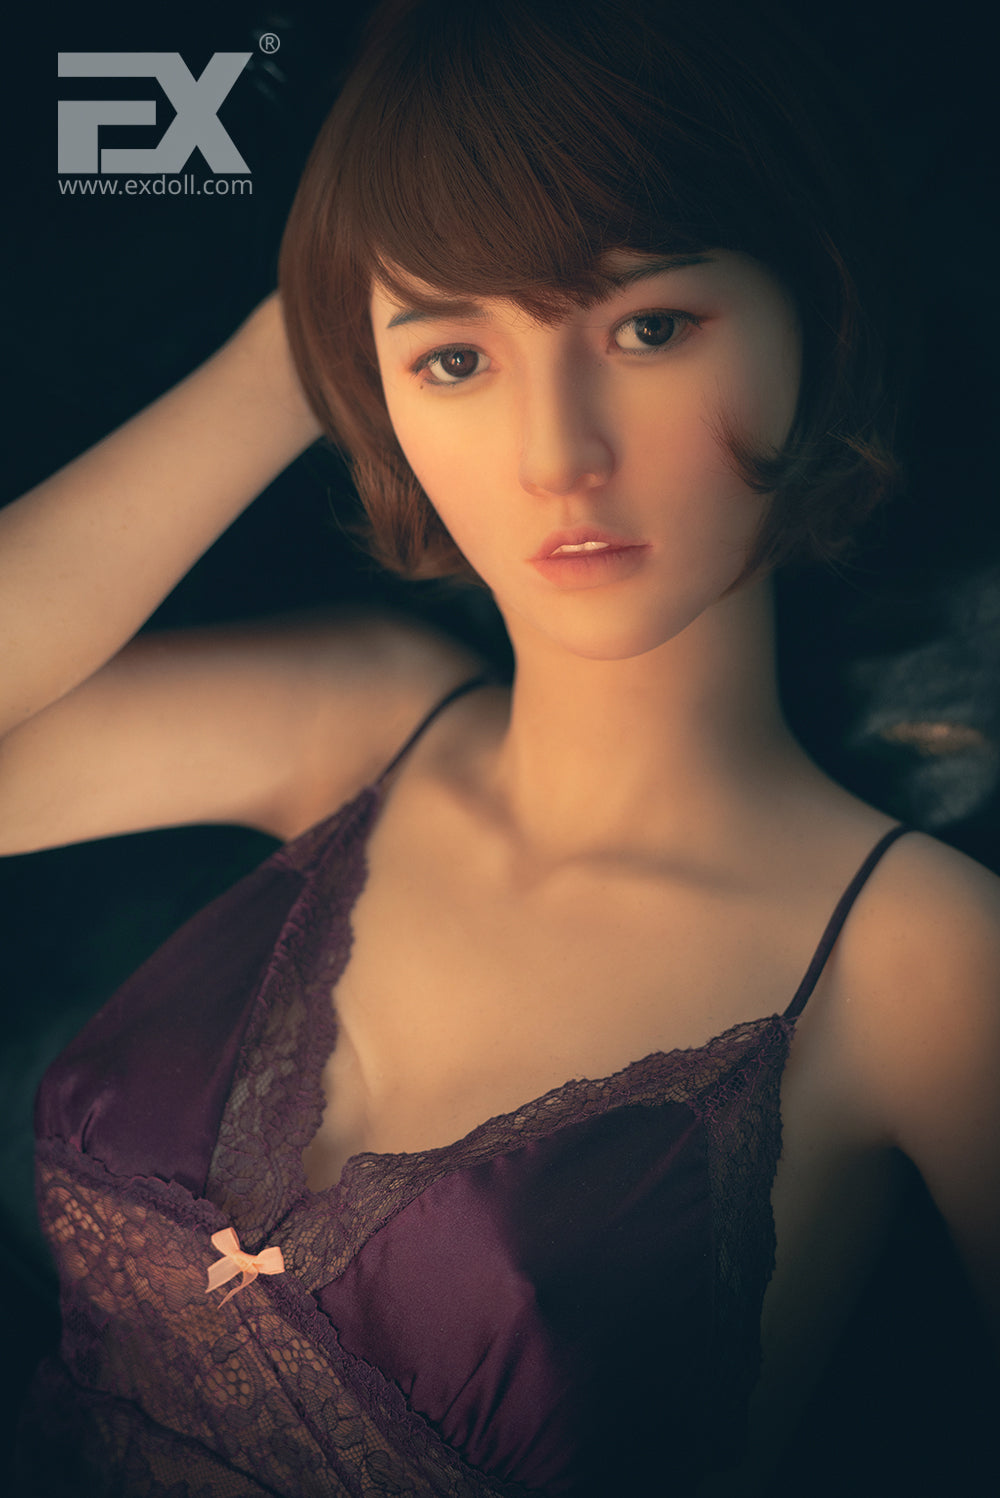 EX Doll Ukiyoe Series 170 cm Silicone - Yang Xian | Sex Dolls SG